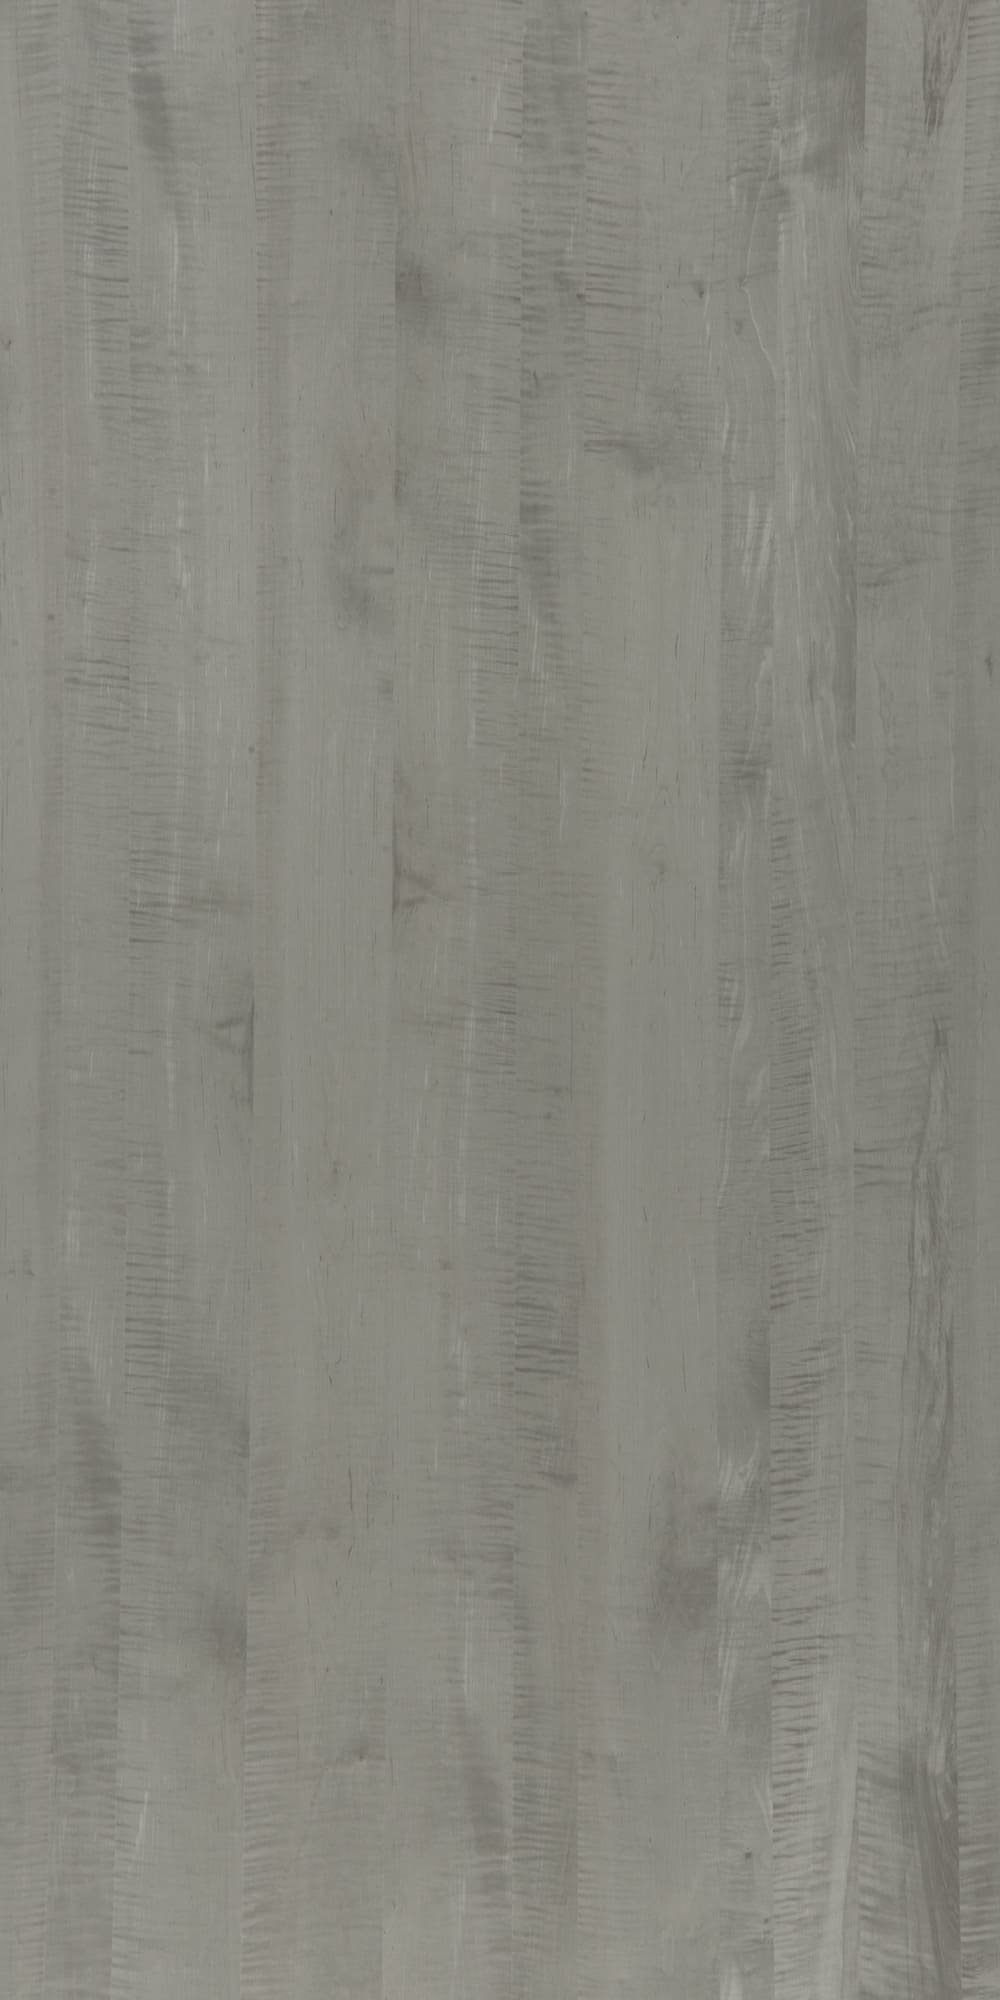 SJ-8714~1 水染楓木水波自然拼塗裝板